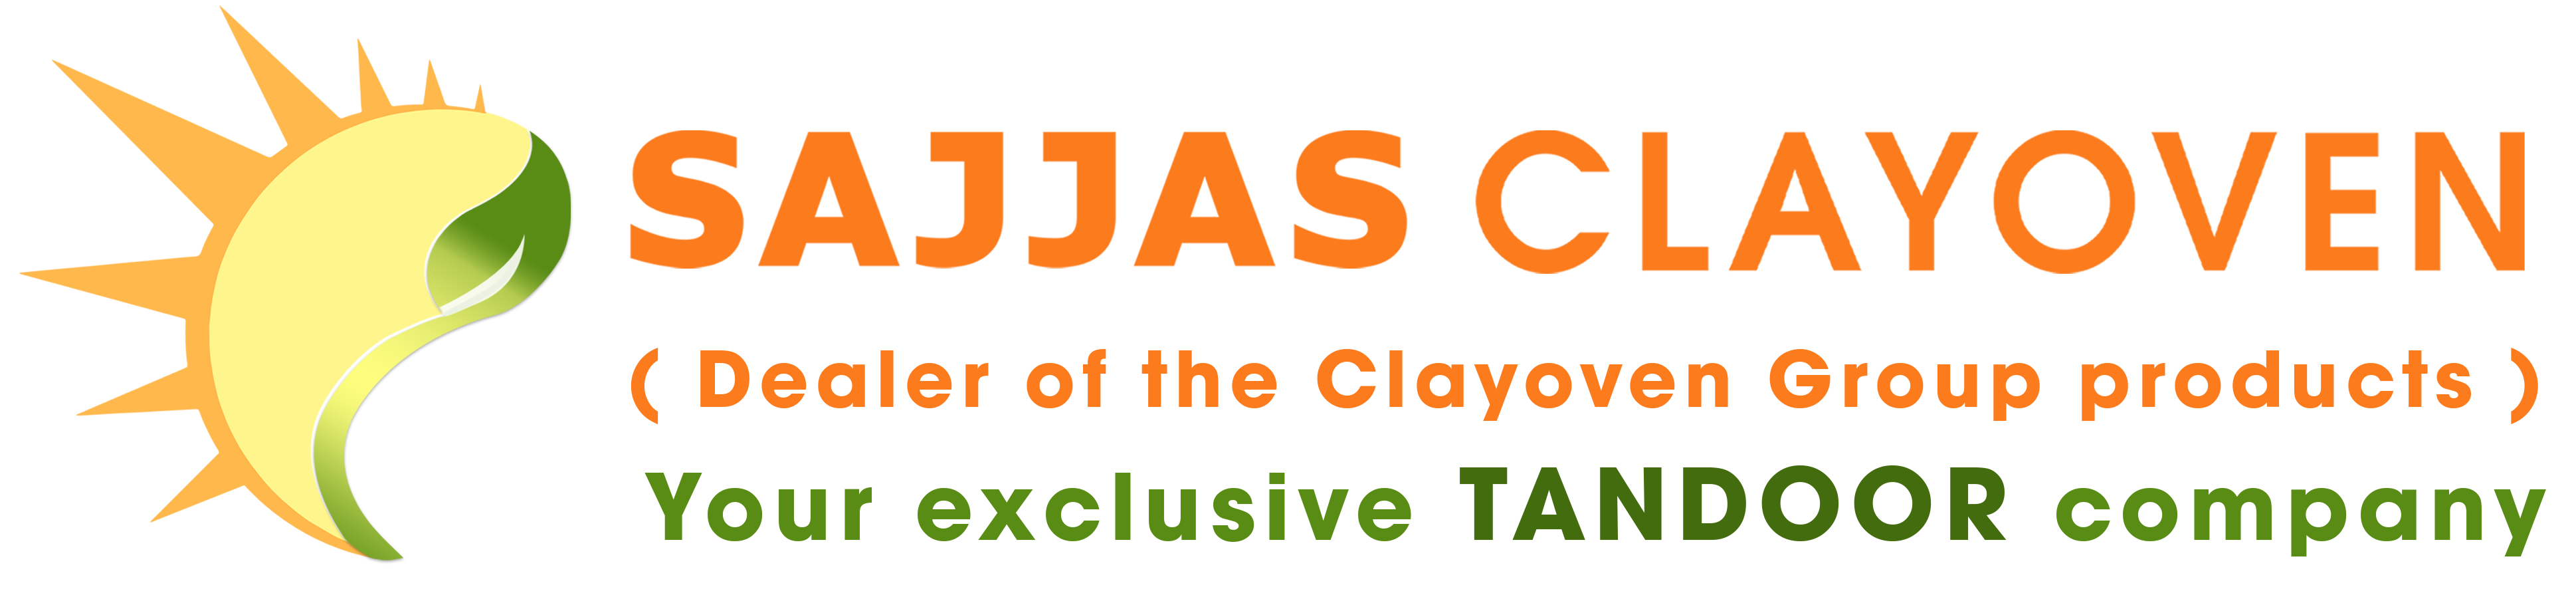 SajjaS Clayoven - An Exclusive Tandoor Oven Company